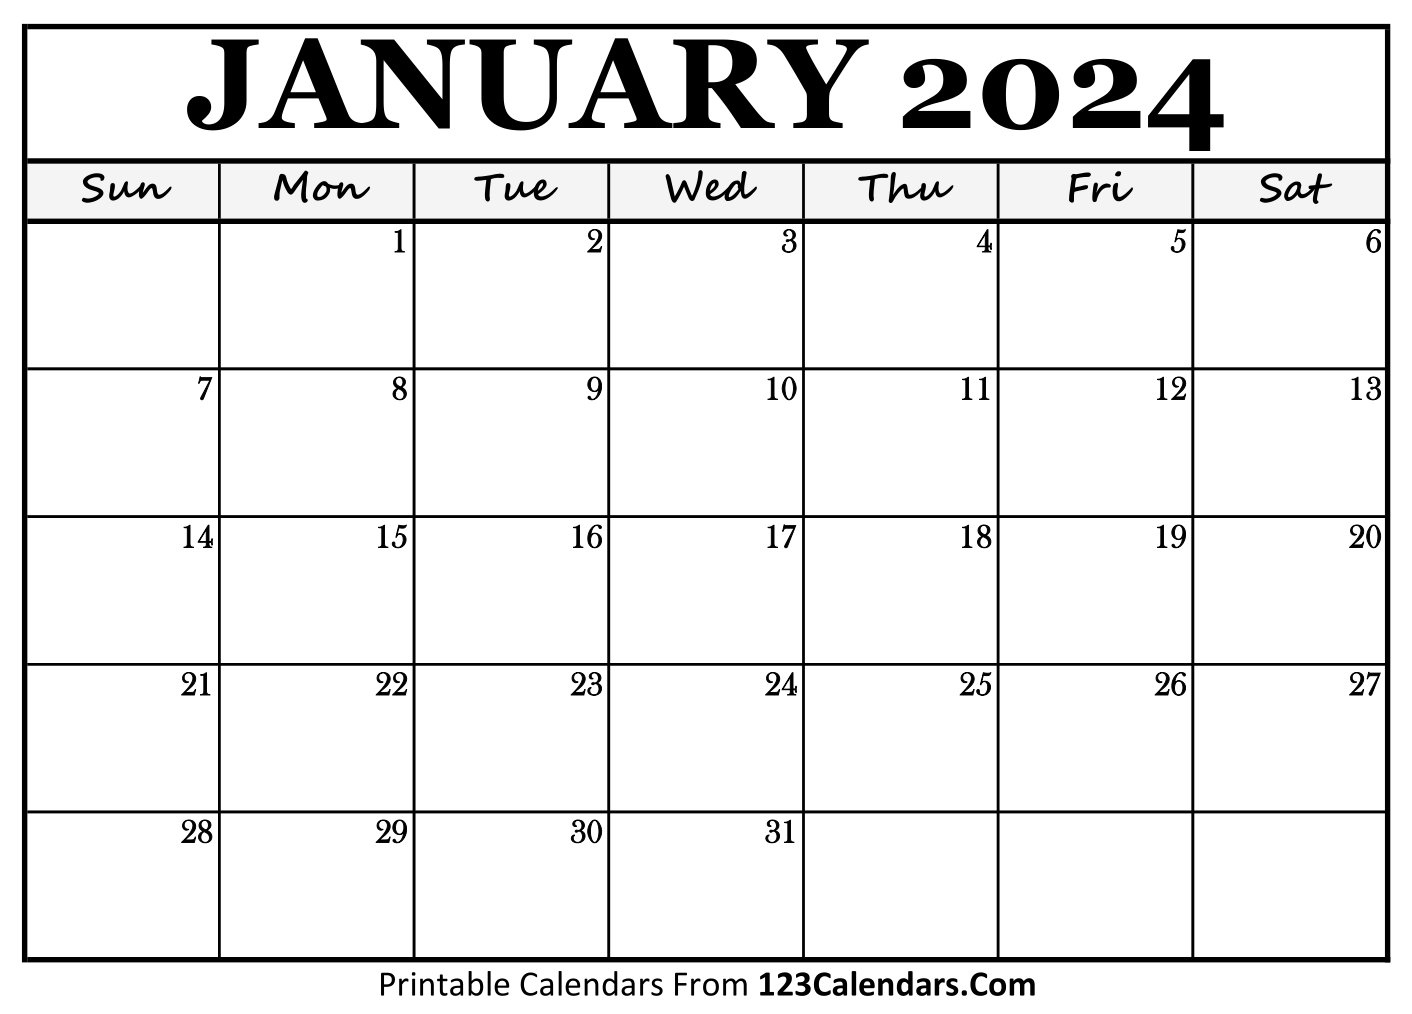 Printable January 2024 Calendar Templates - 123Calendars for Free Printable Calendar 2024 January